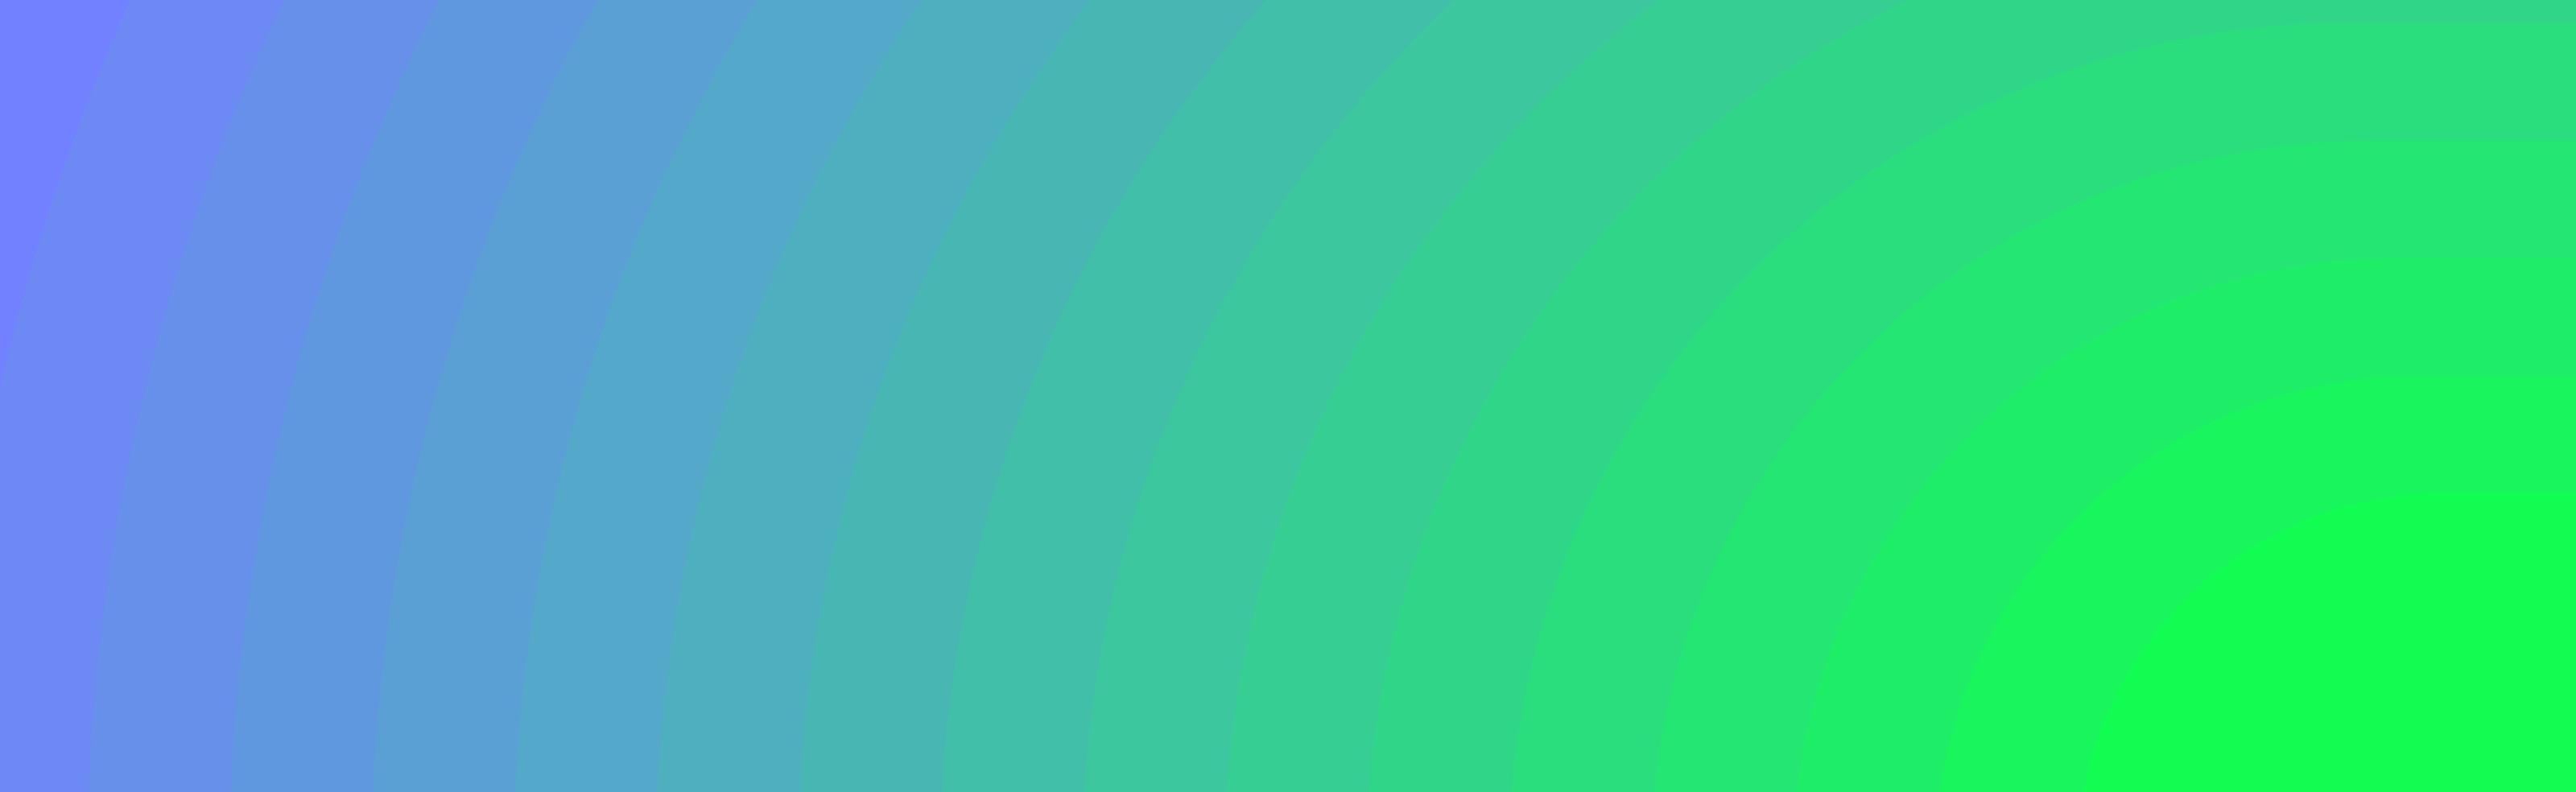 blue green gradient color